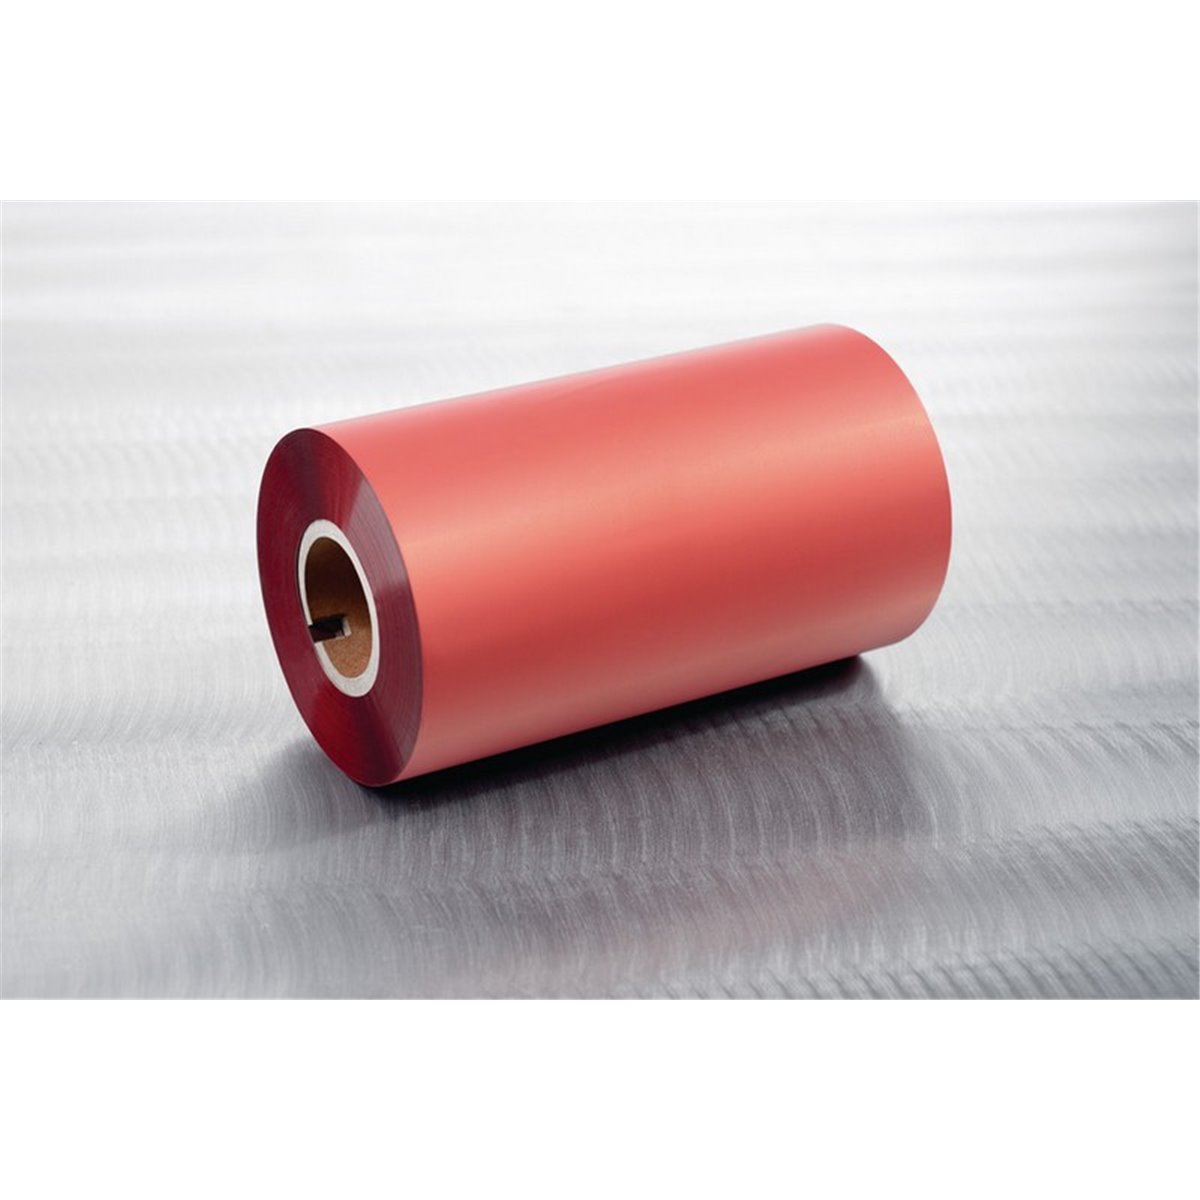 Thermal transfer ribbon TTRR 110 mm-PET-RD, 110mm x 300m, red HellermannTyton